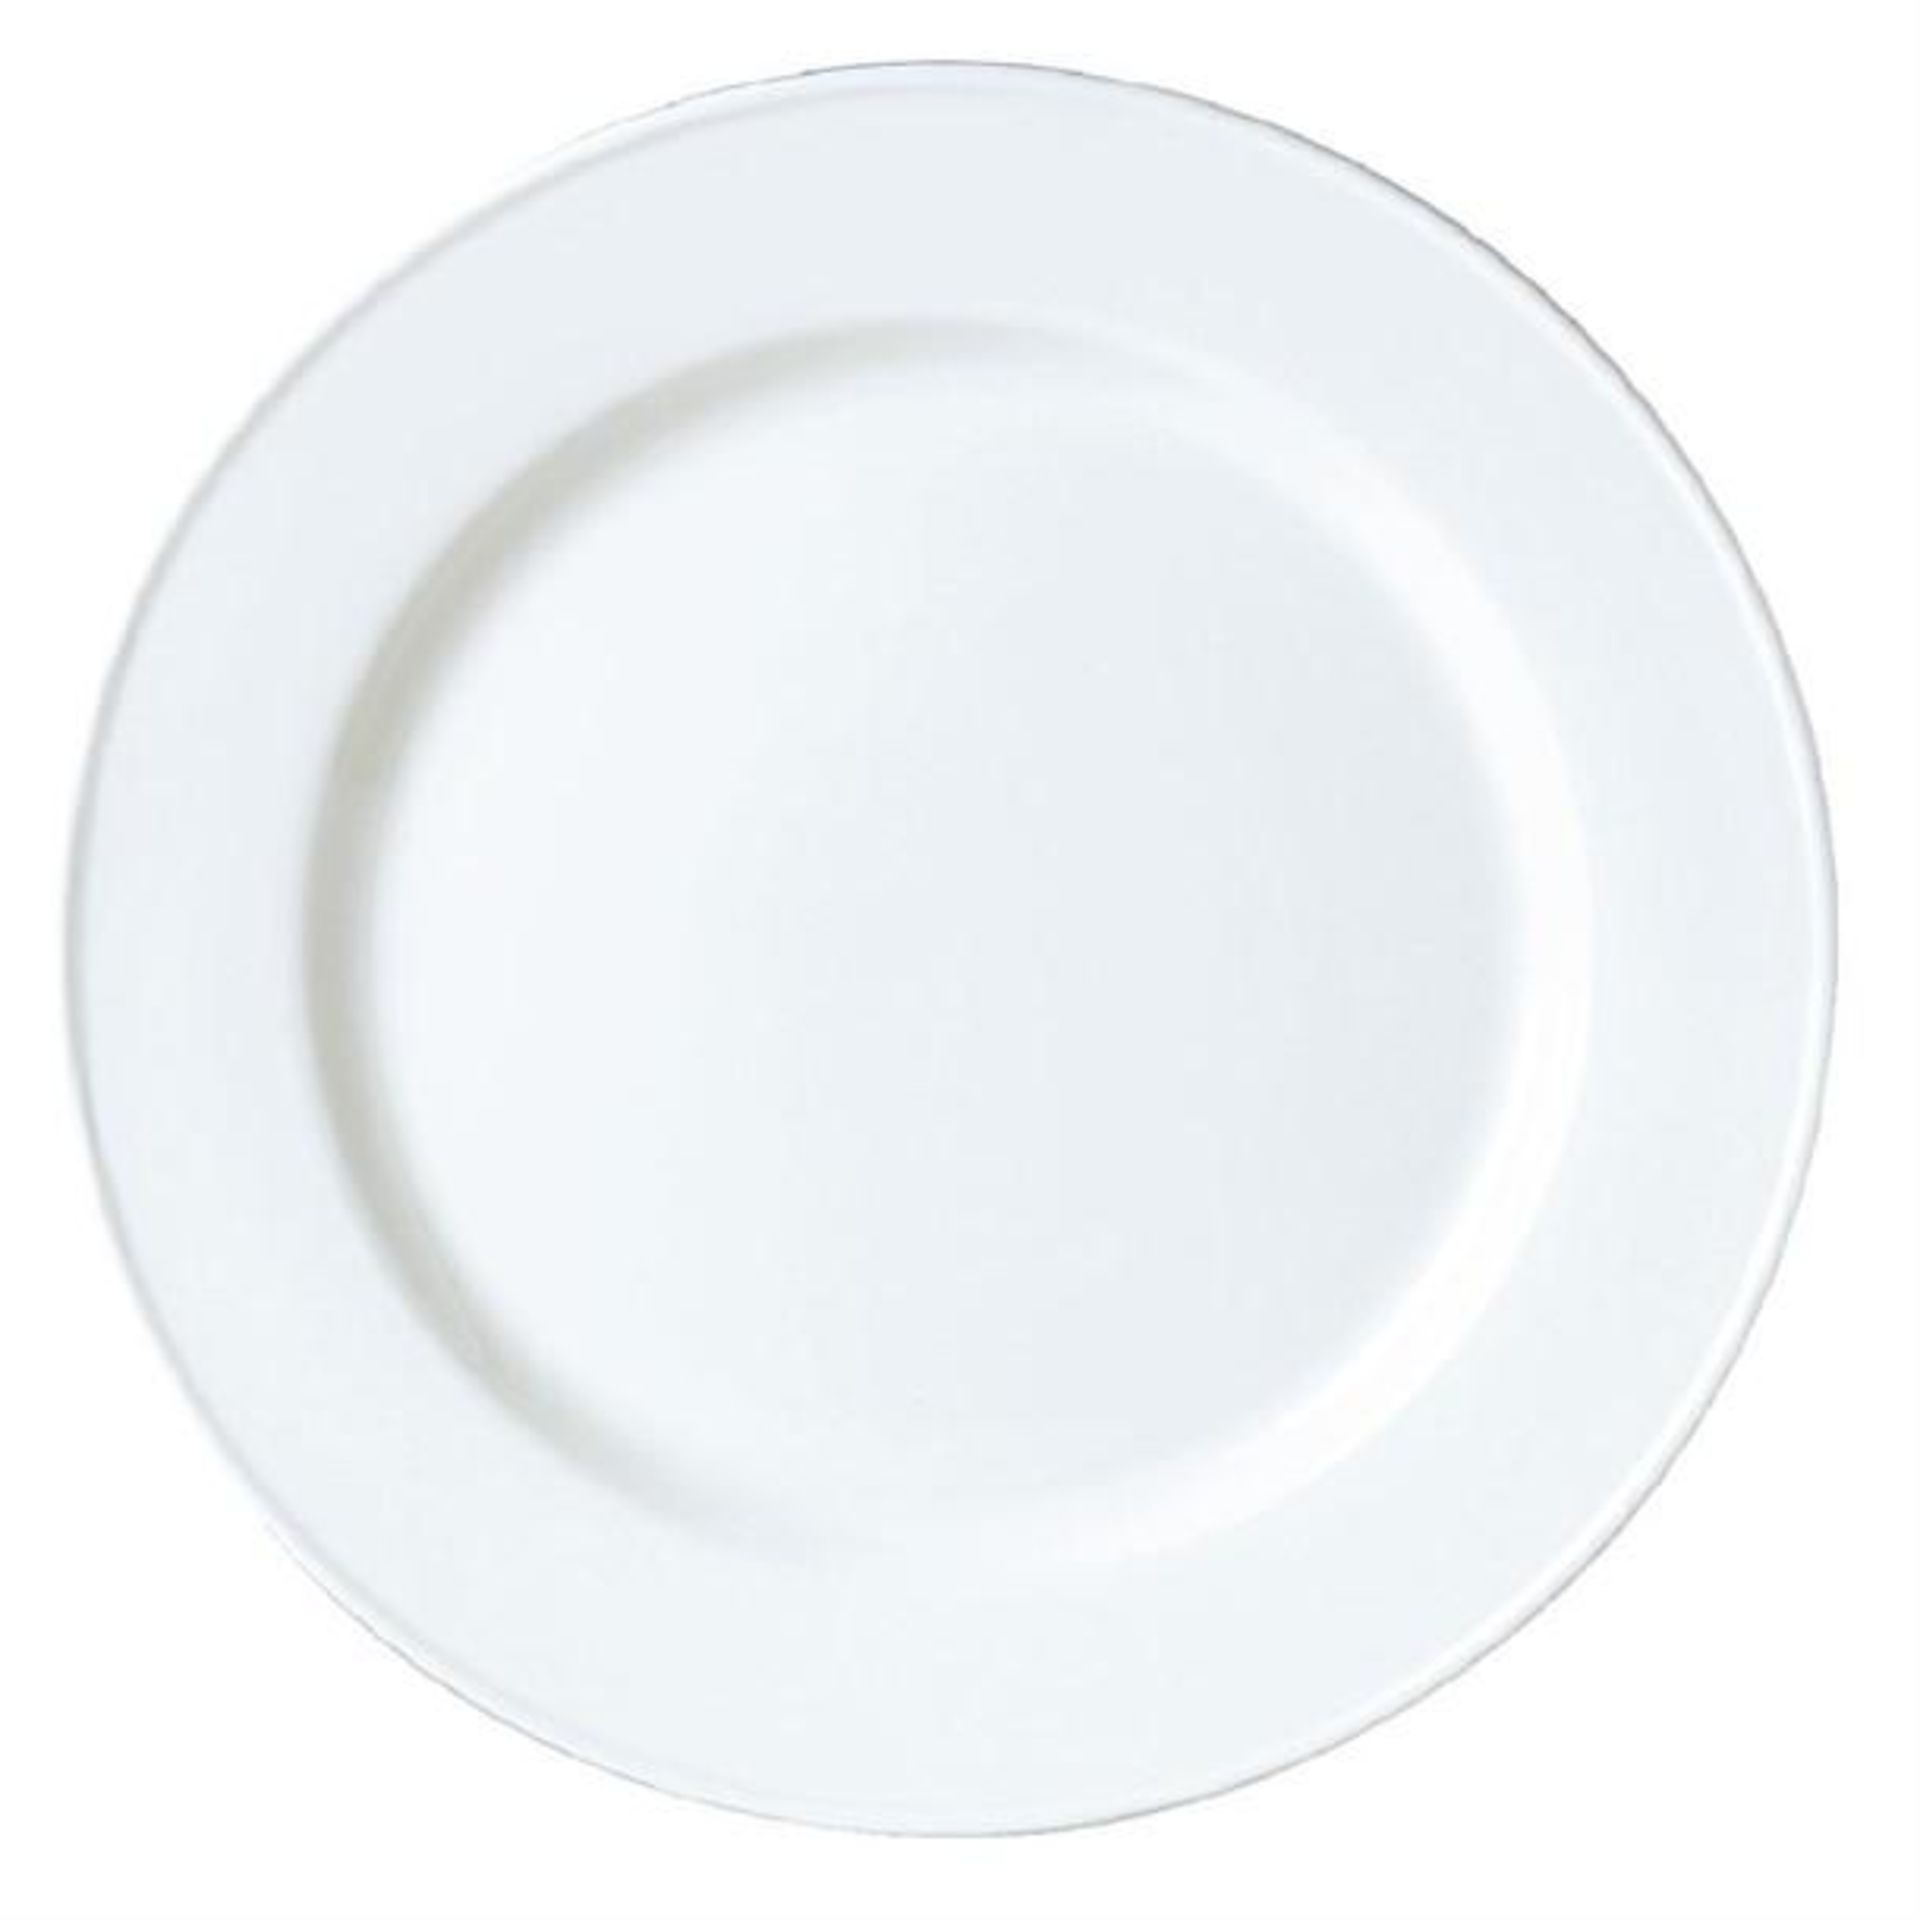 10 x Steelite Simplicity Commercial Pizza Plates in White - 315mm - Ref- V0246 - CL011 - 12341 - MC